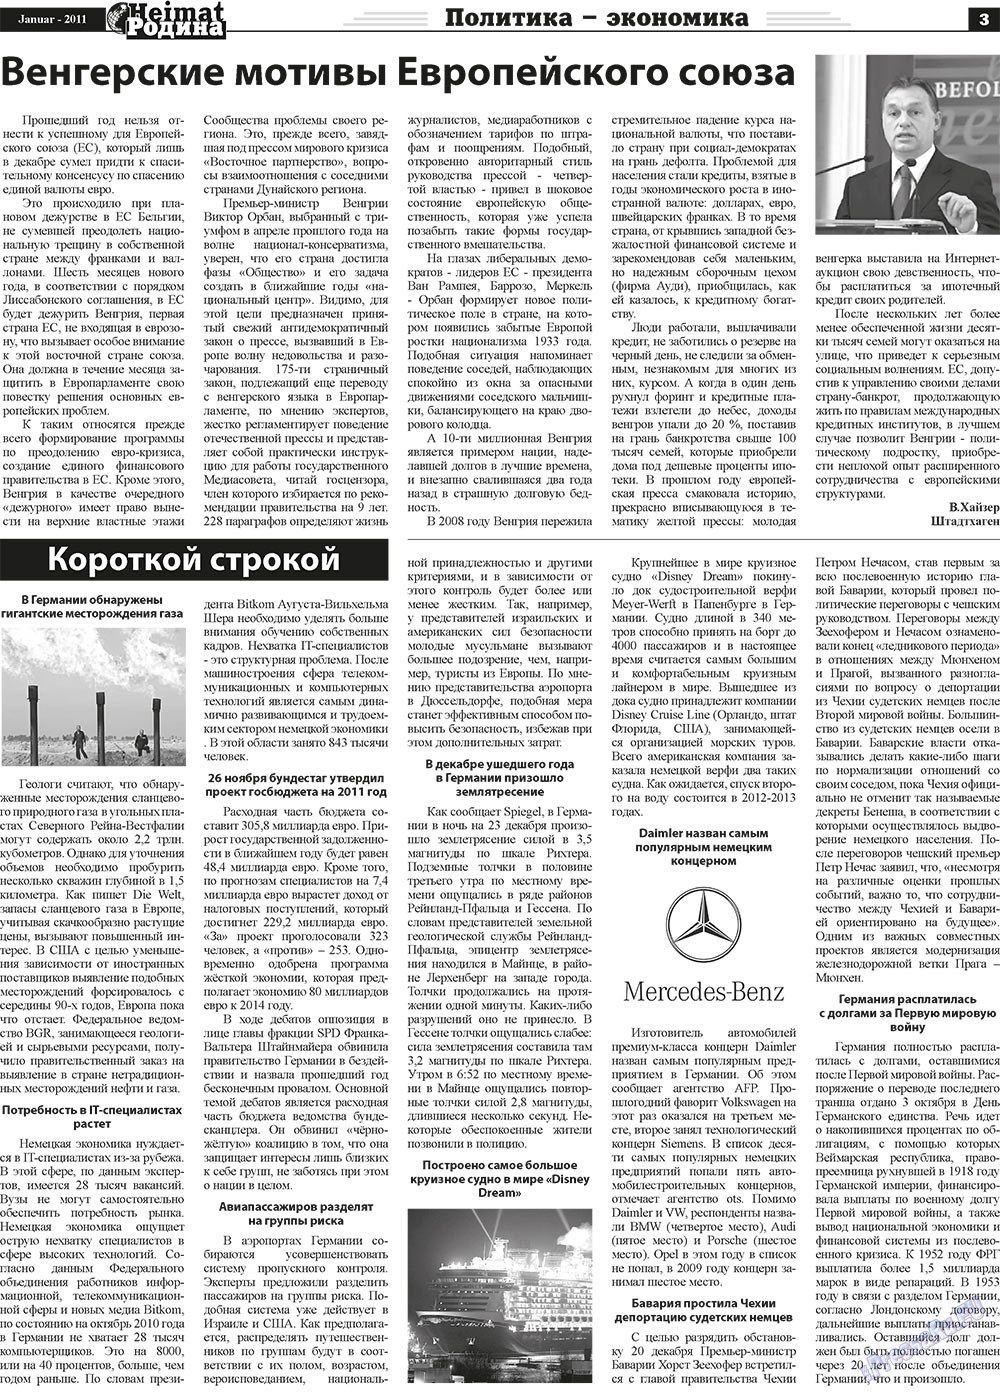 Heimat-Родина, газета. 2011 №1 стр.3